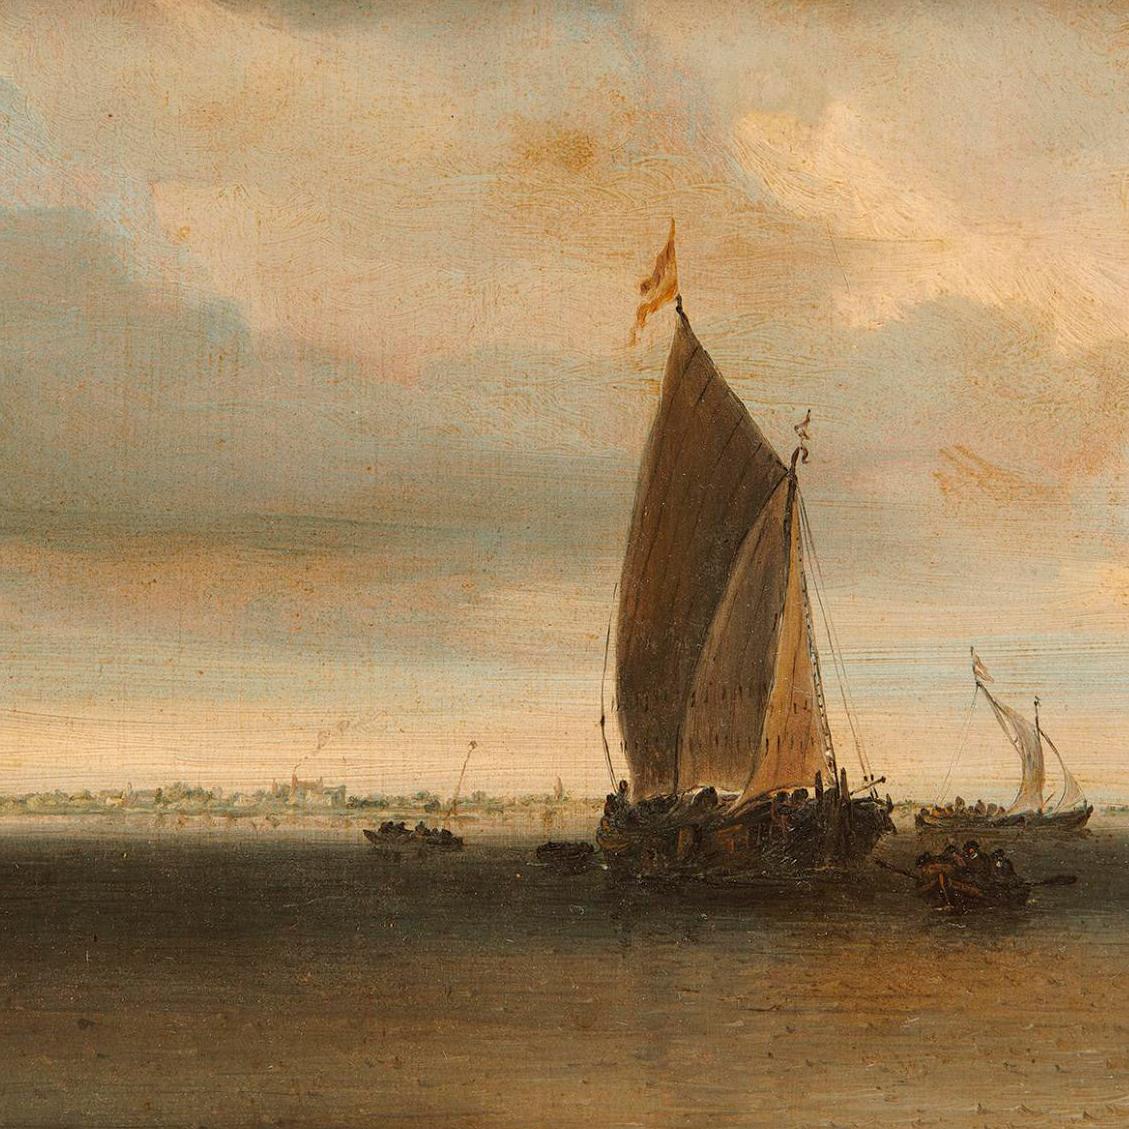 A "Great" Van Ruysdael  - Lots sold